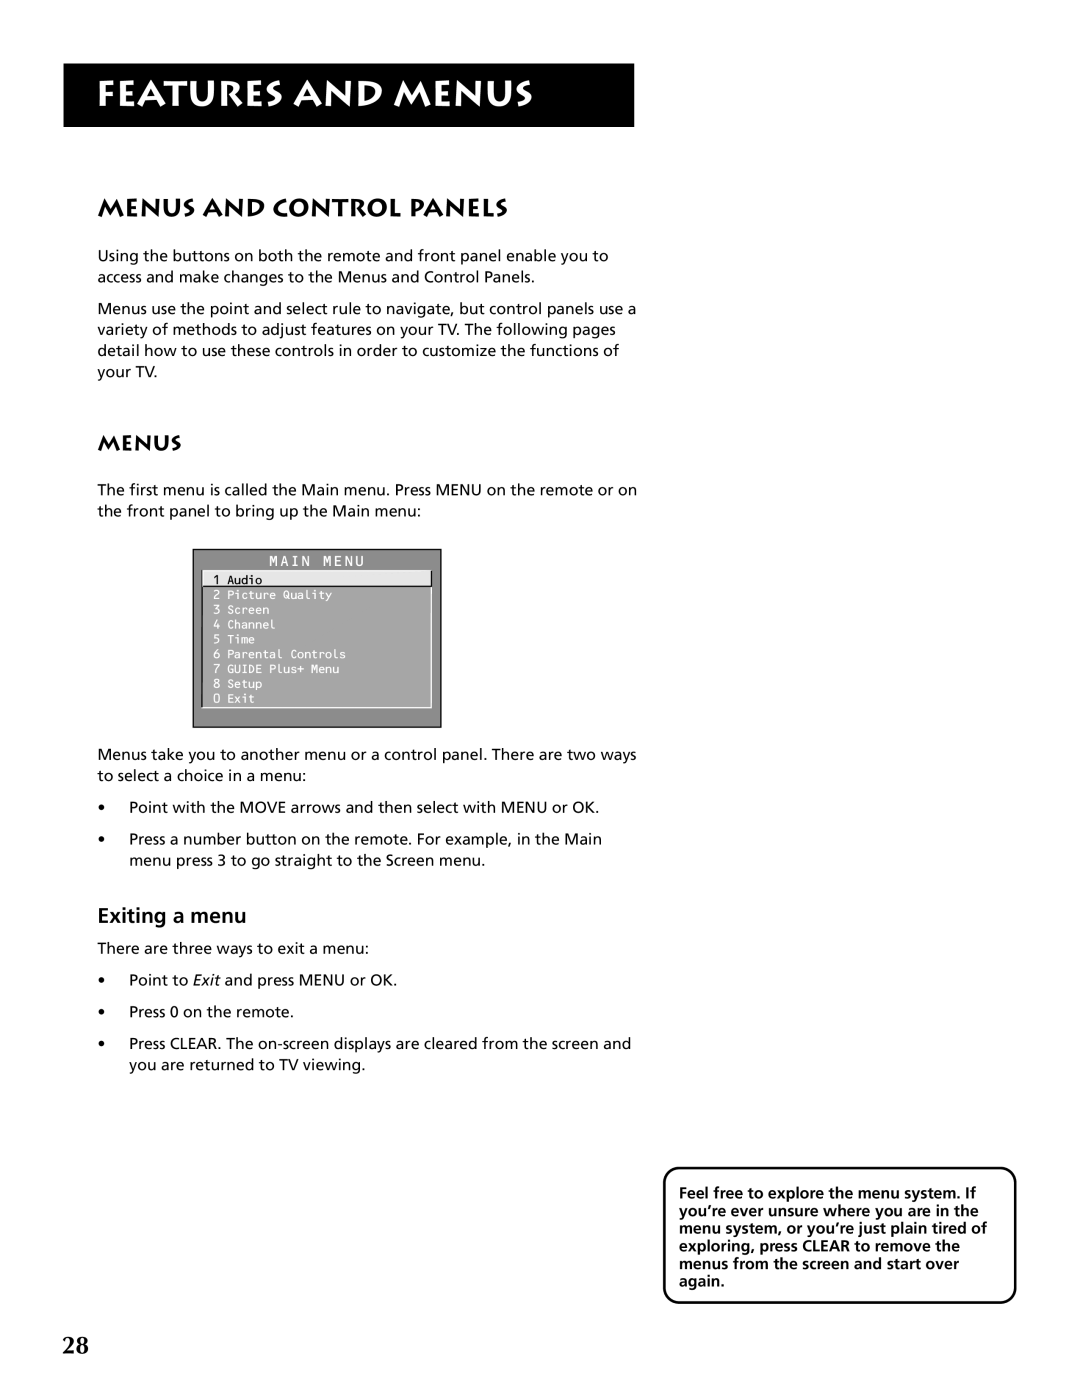 RCA F32691 manual Menus And Control Panels, Exiting a menu, Features And Menus 